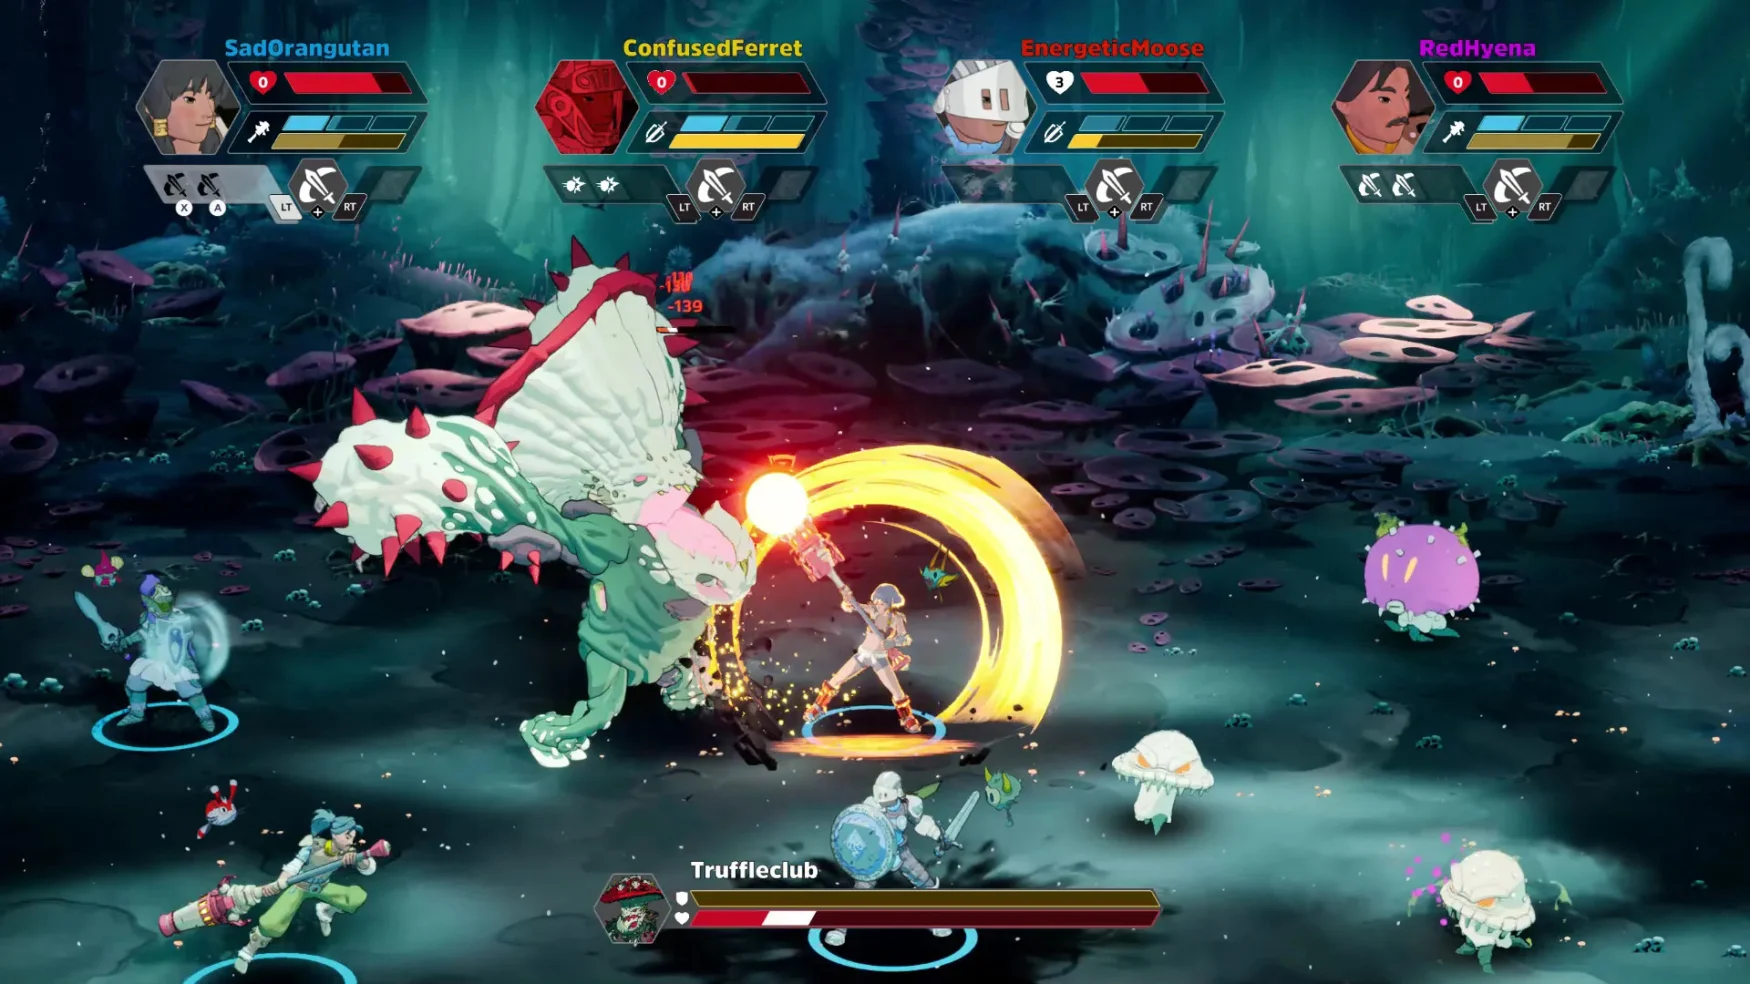 Screenshot from ‘Towerborne,’ featuring co-op brawler gameplay in a dark dungeon